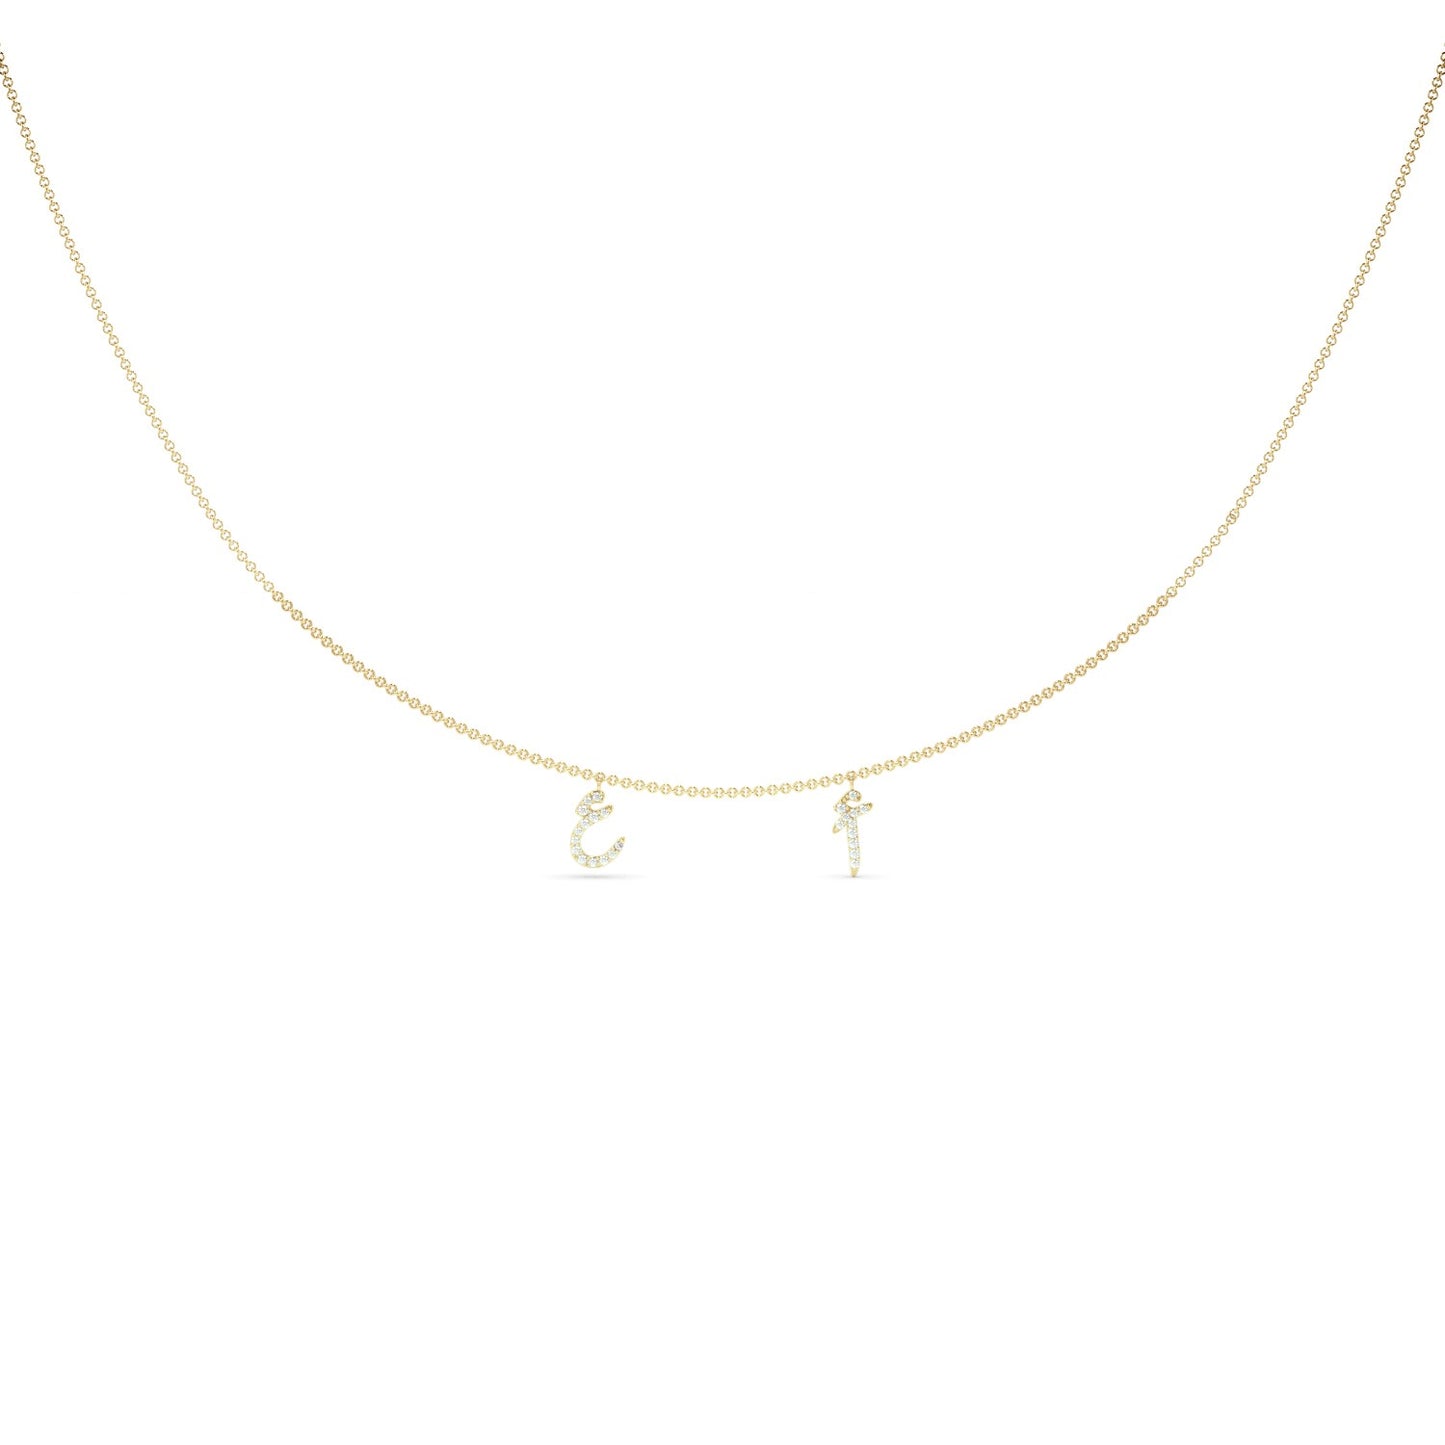 Customize your 2-Letter Pavé Diamond Necklace